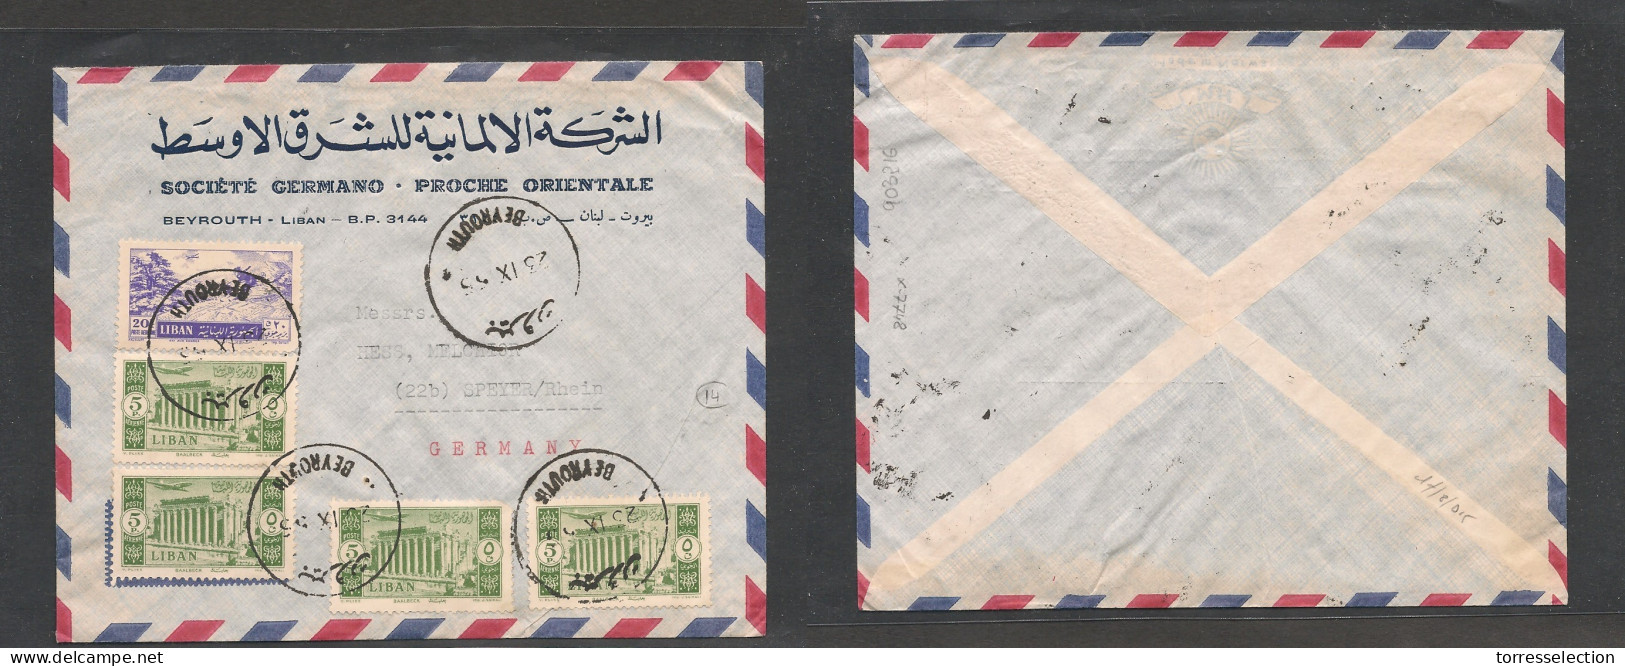 LEBANON. Lebanon Cover - 1955 Beyrouth To Germany Speyer Rhein Air Mult Fkd Env, XF XSALE. - Libanon